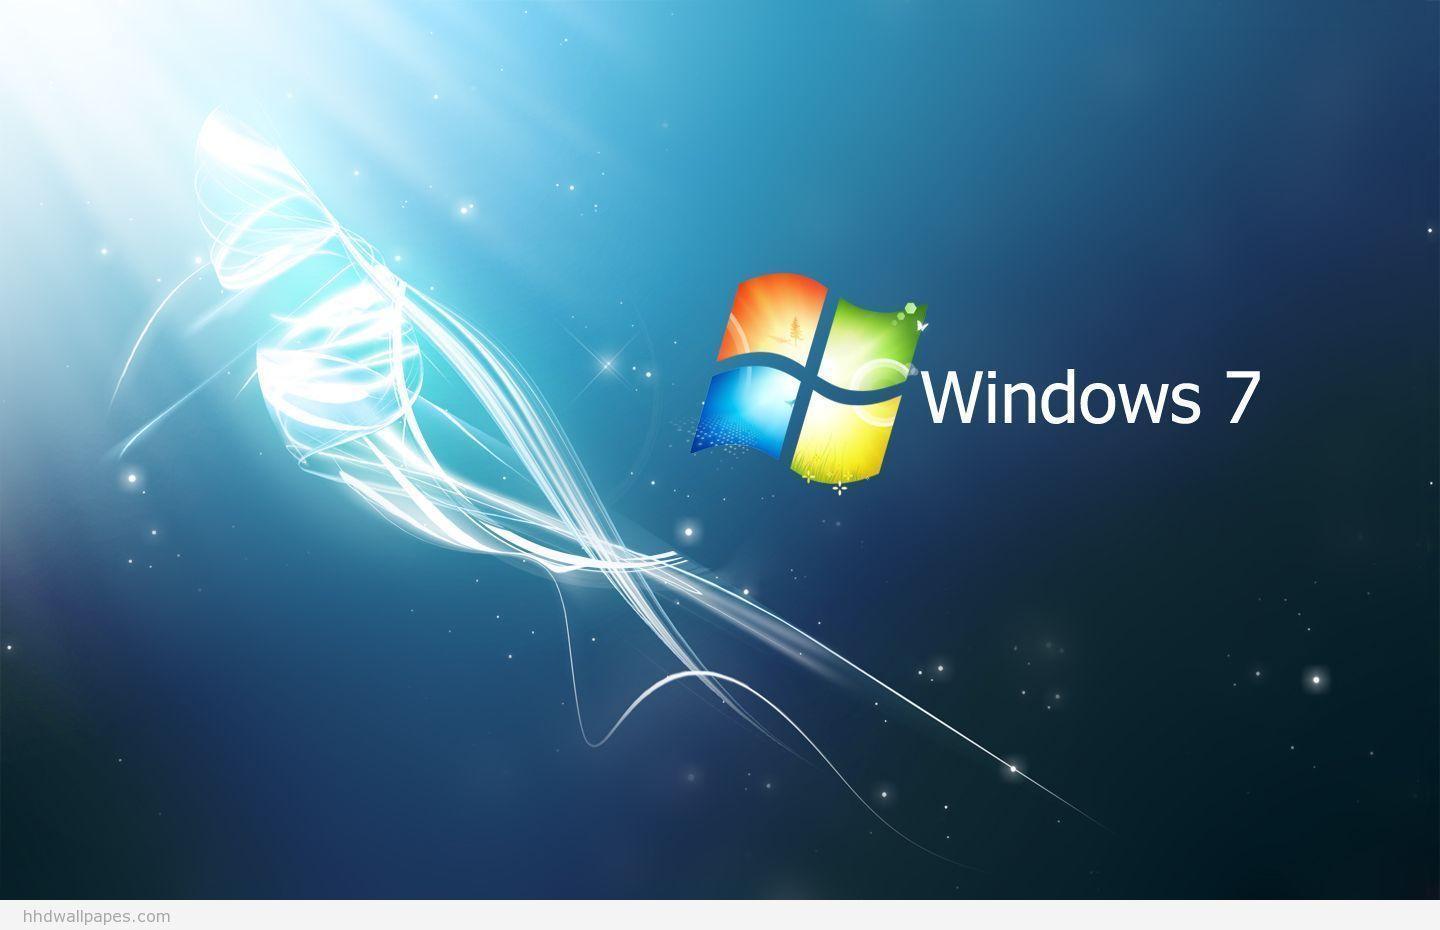 Windows 7 Desktop HD Quality Win 7 Photo Gallery 1440x900px High